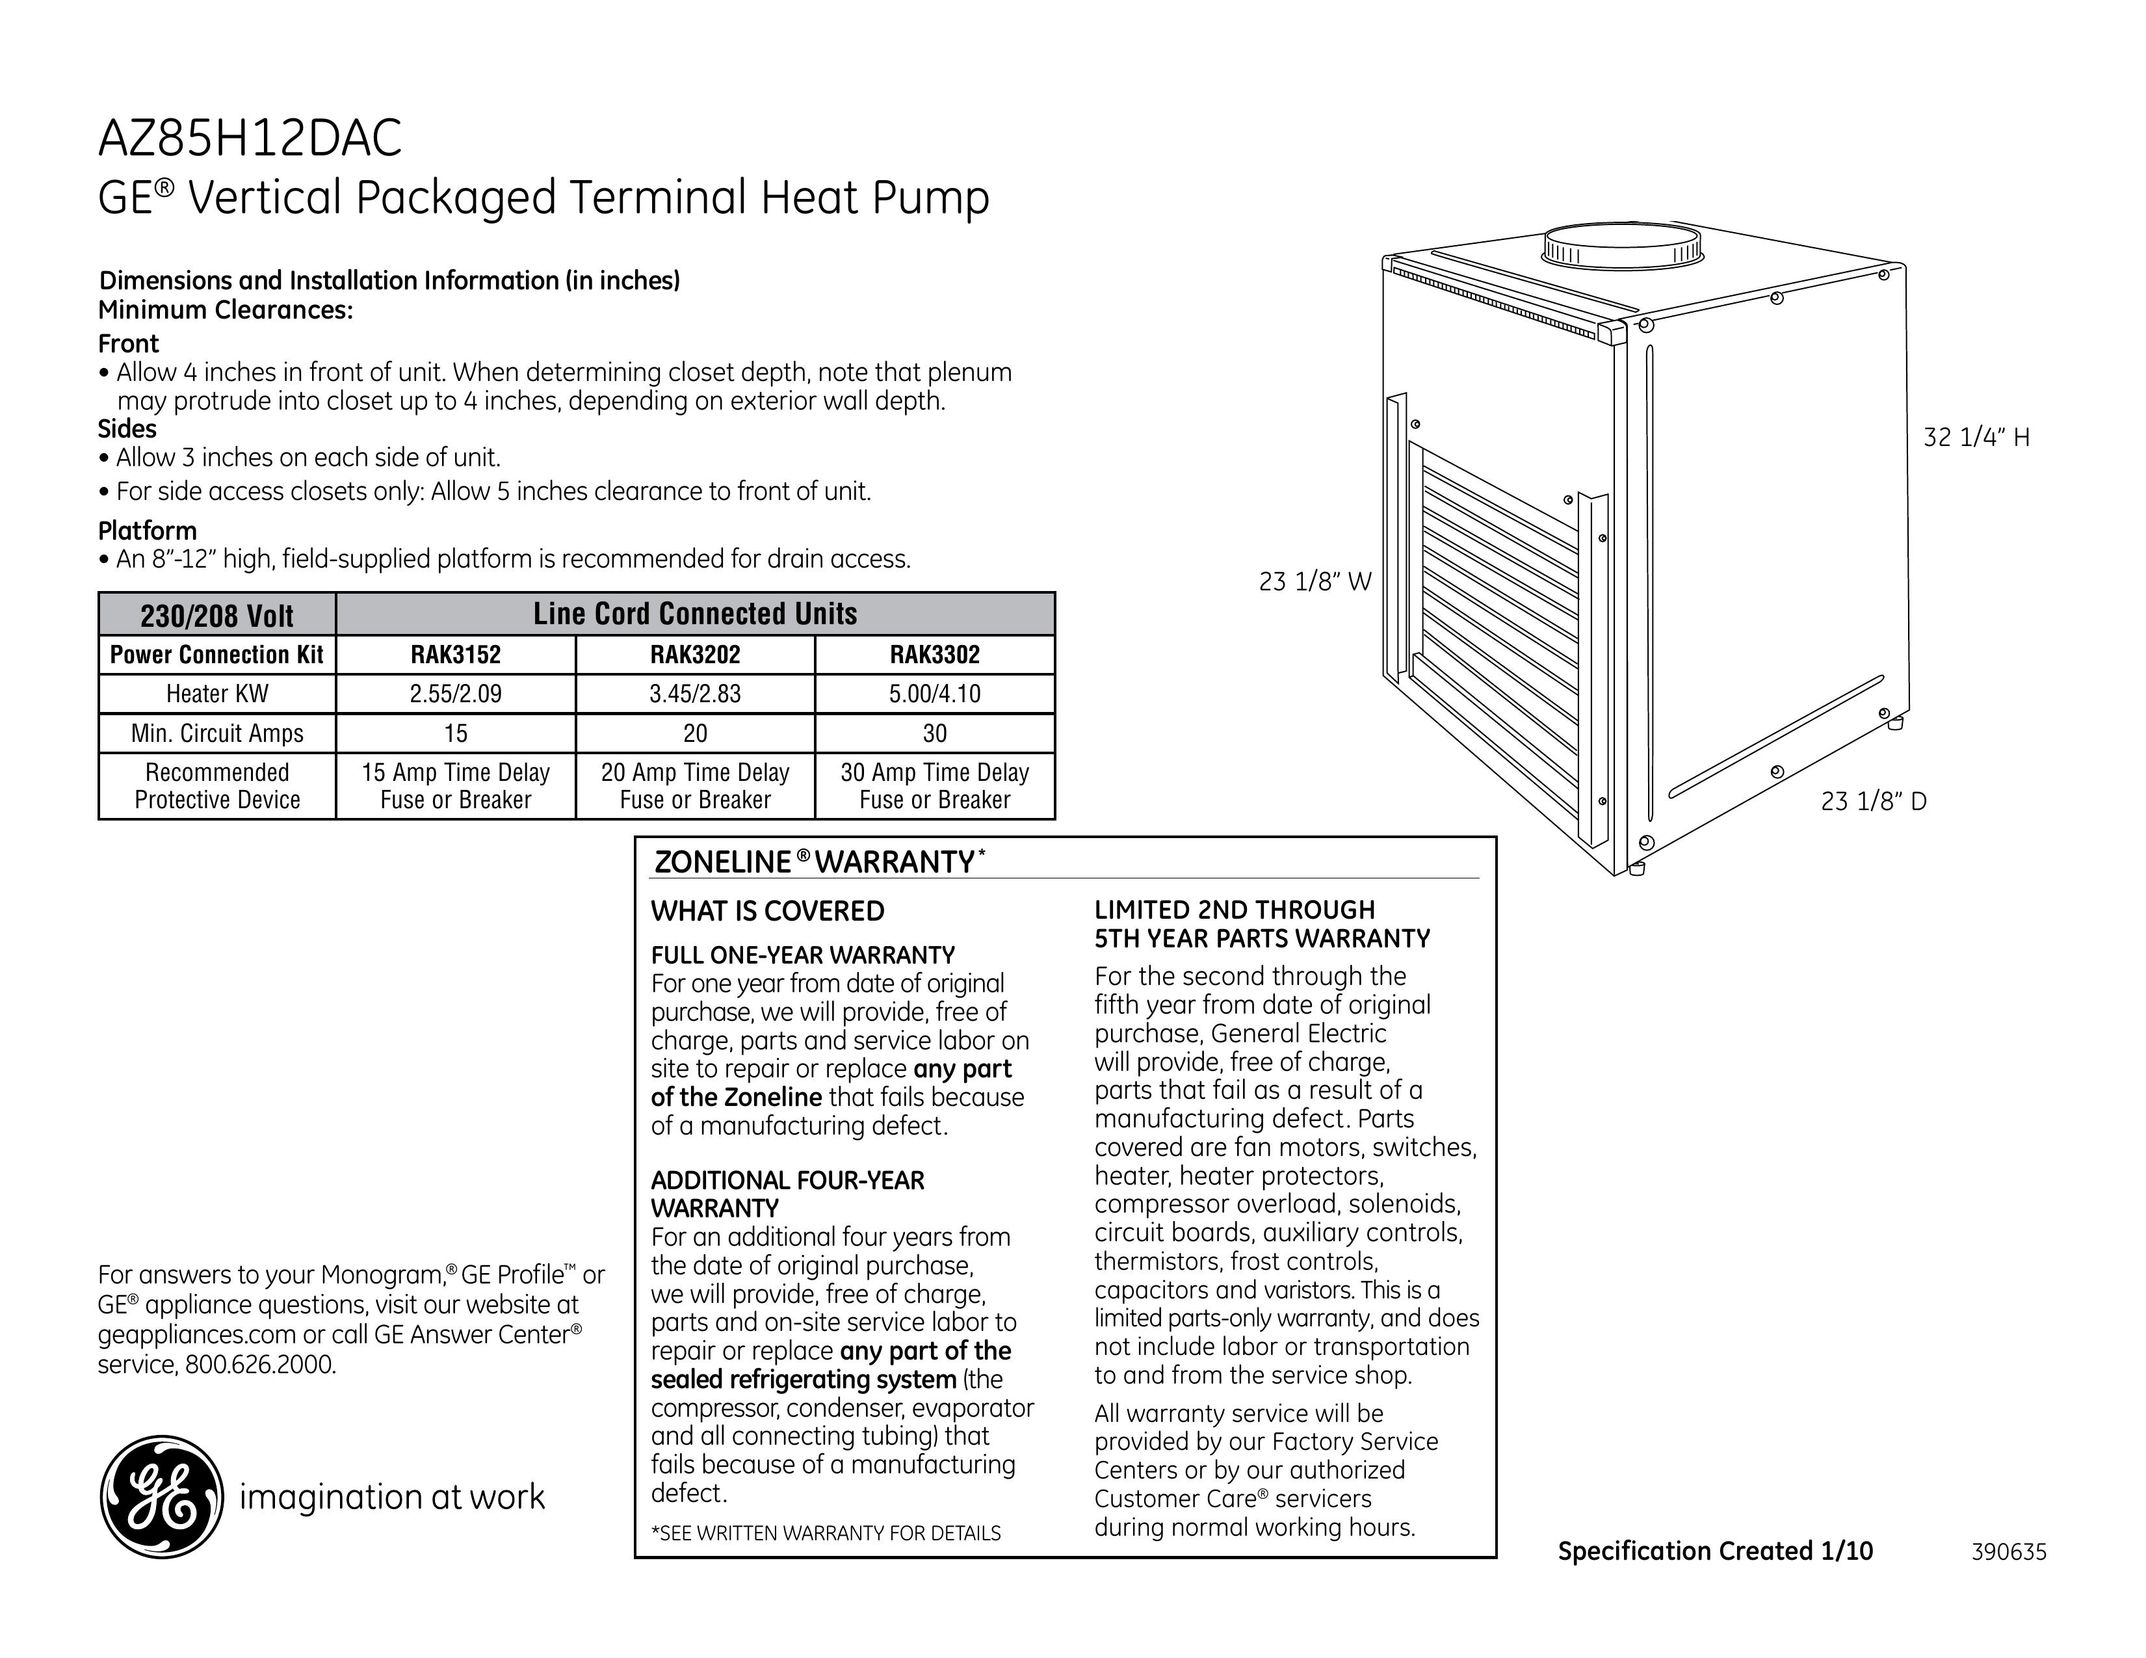 GE AZ85H12DAC Heat Pump User Manual